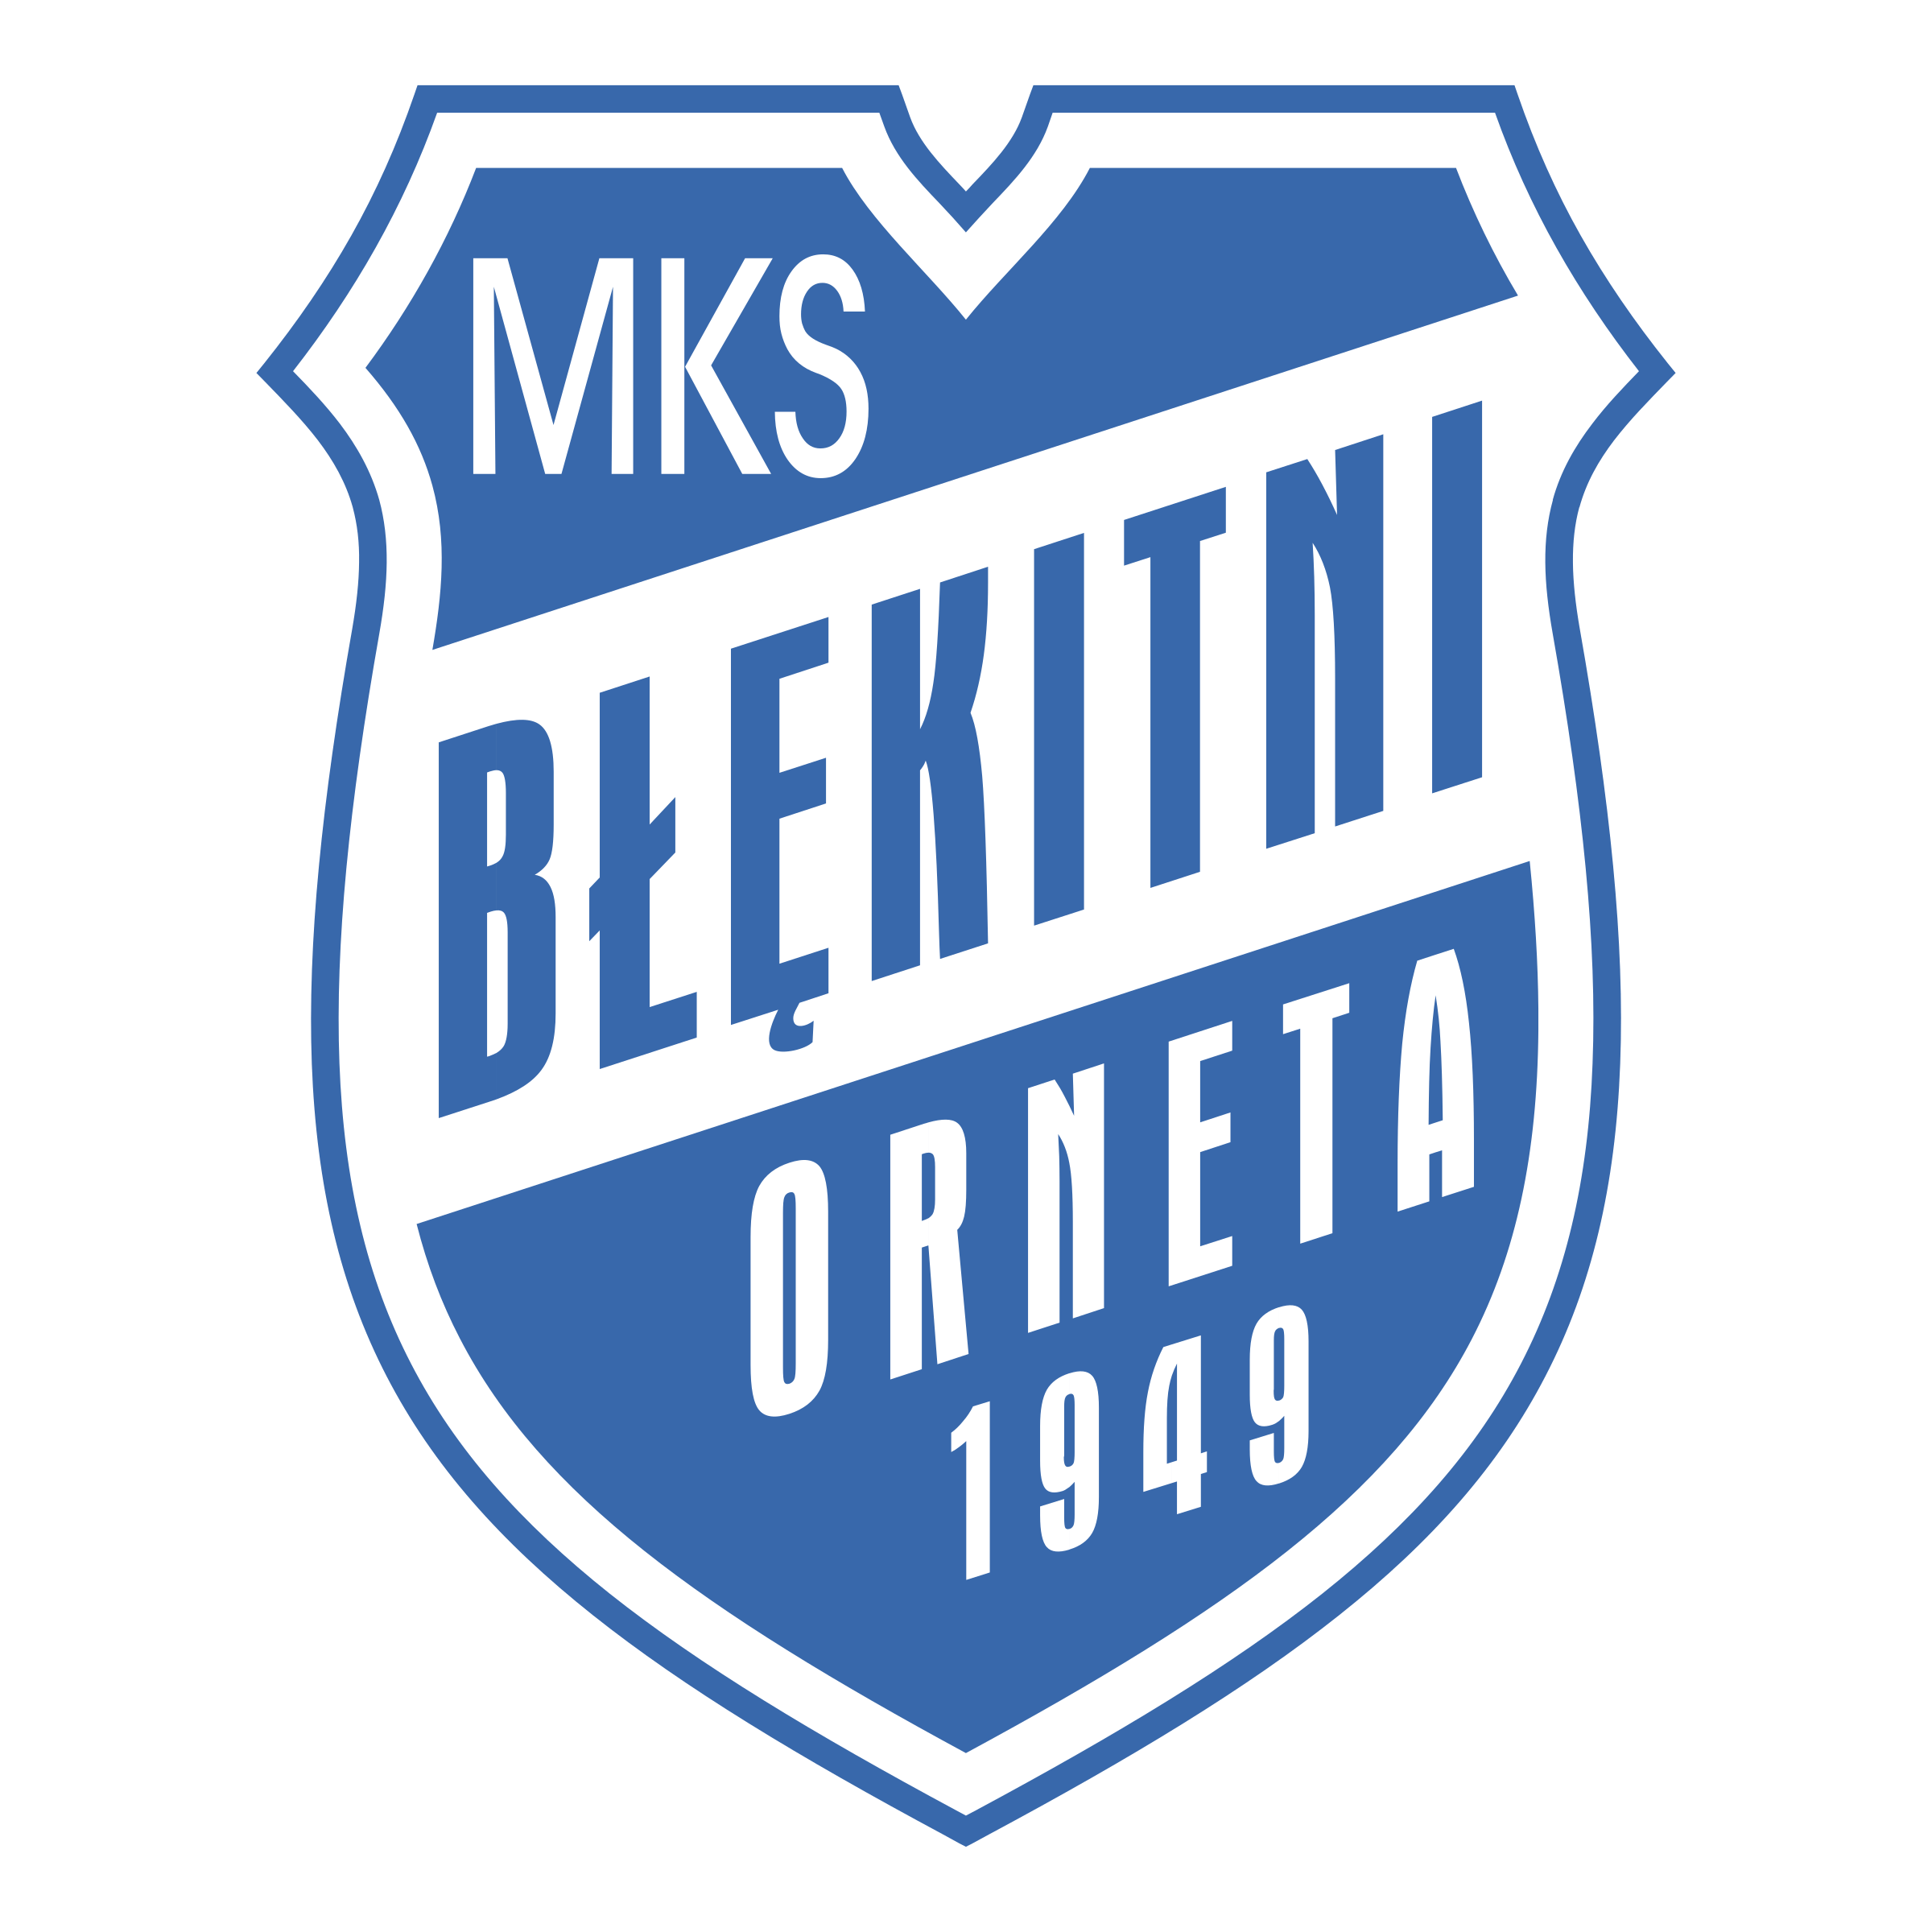 MKS Logo - MKS Blekitni Orneta Logo PNG Transparent & SVG Vector